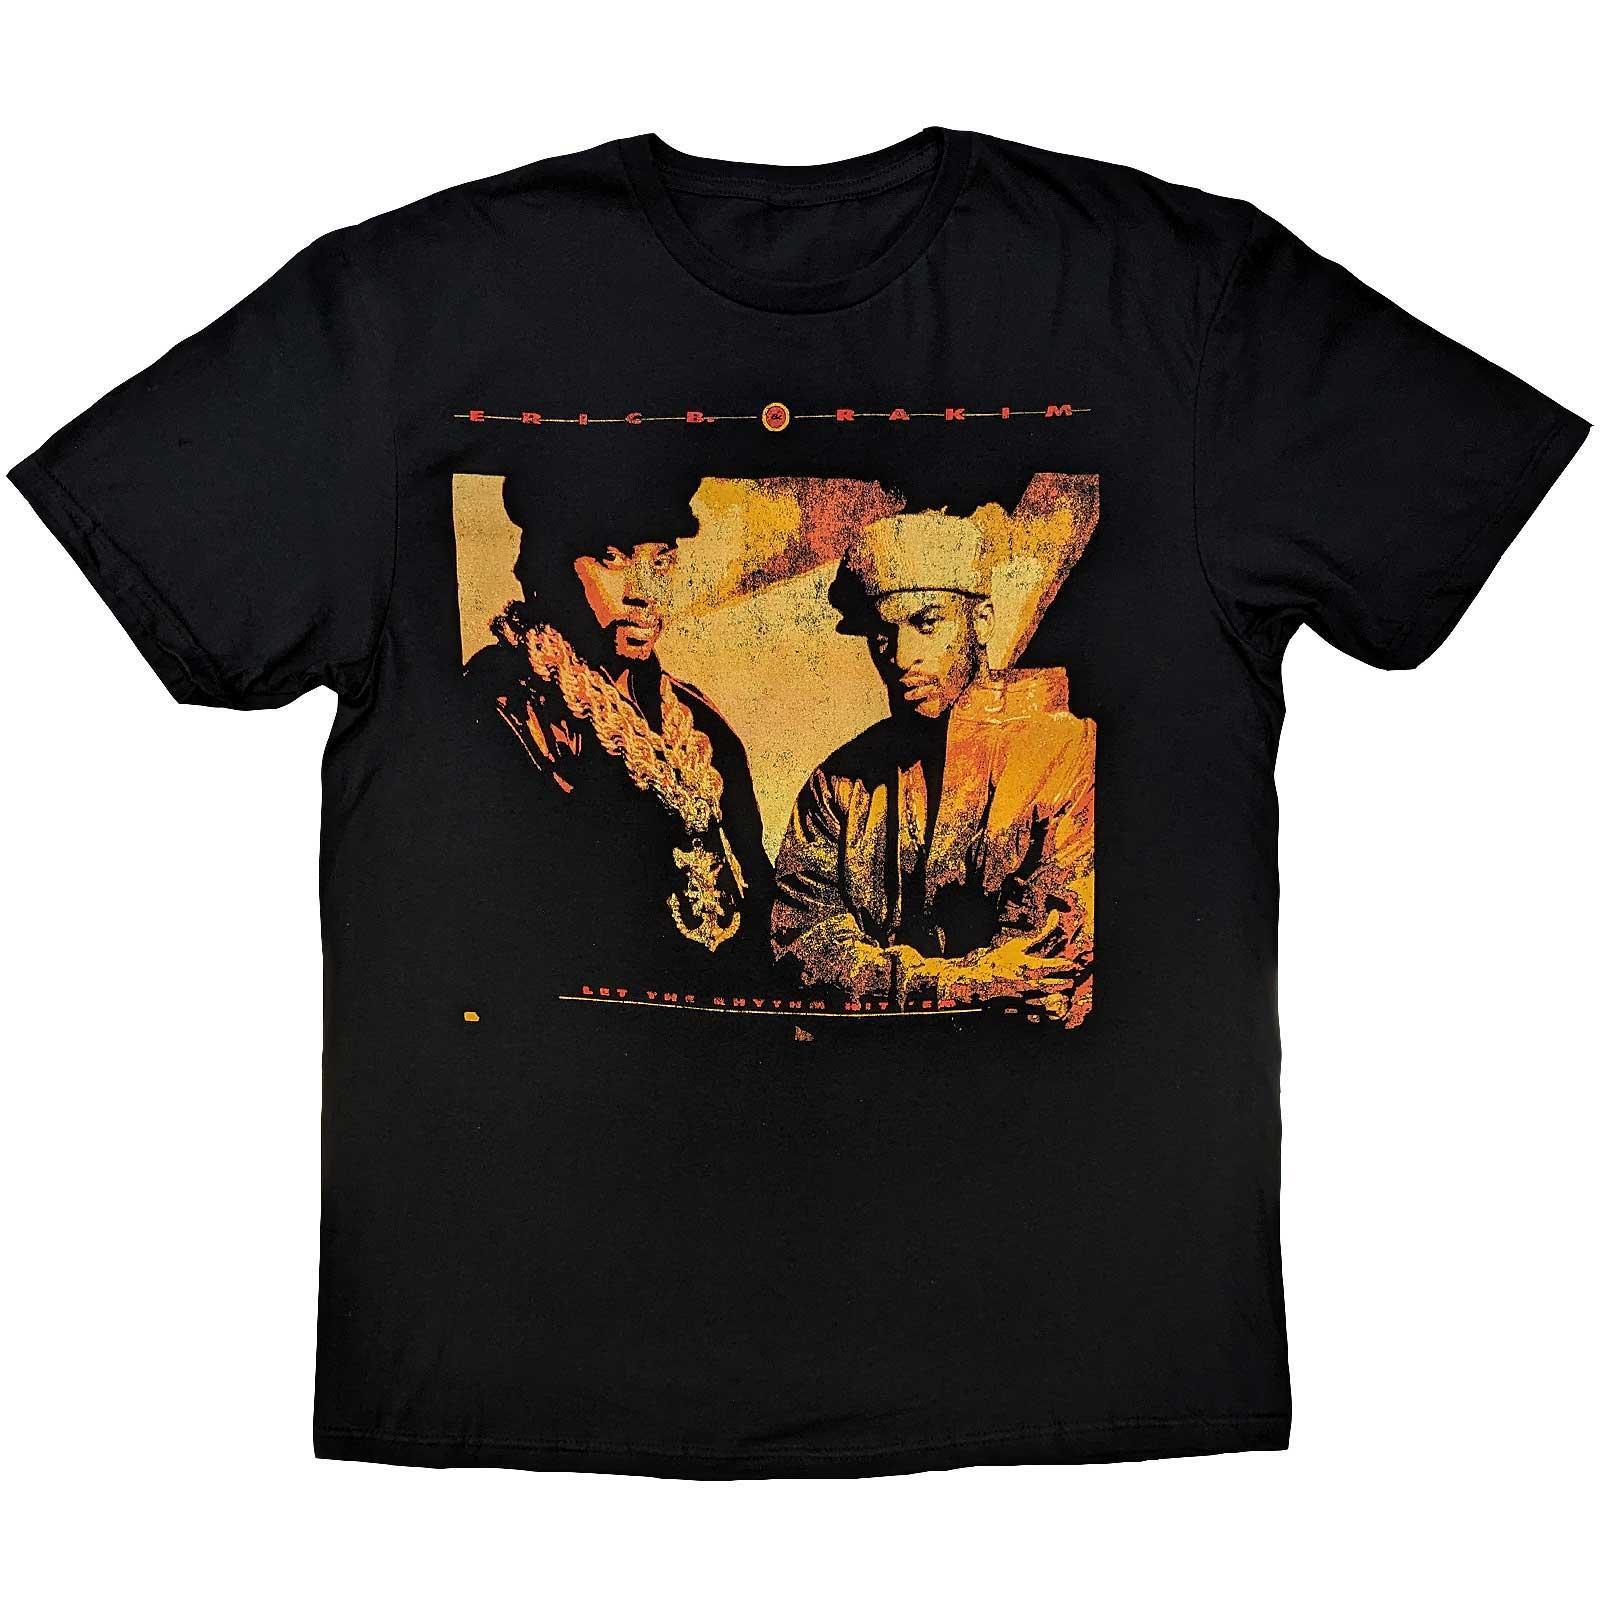 Eric B. & Rakim Unisex Adult Let The Rhythm Begin Back Print Cotton T-Shirt (Black) (M)